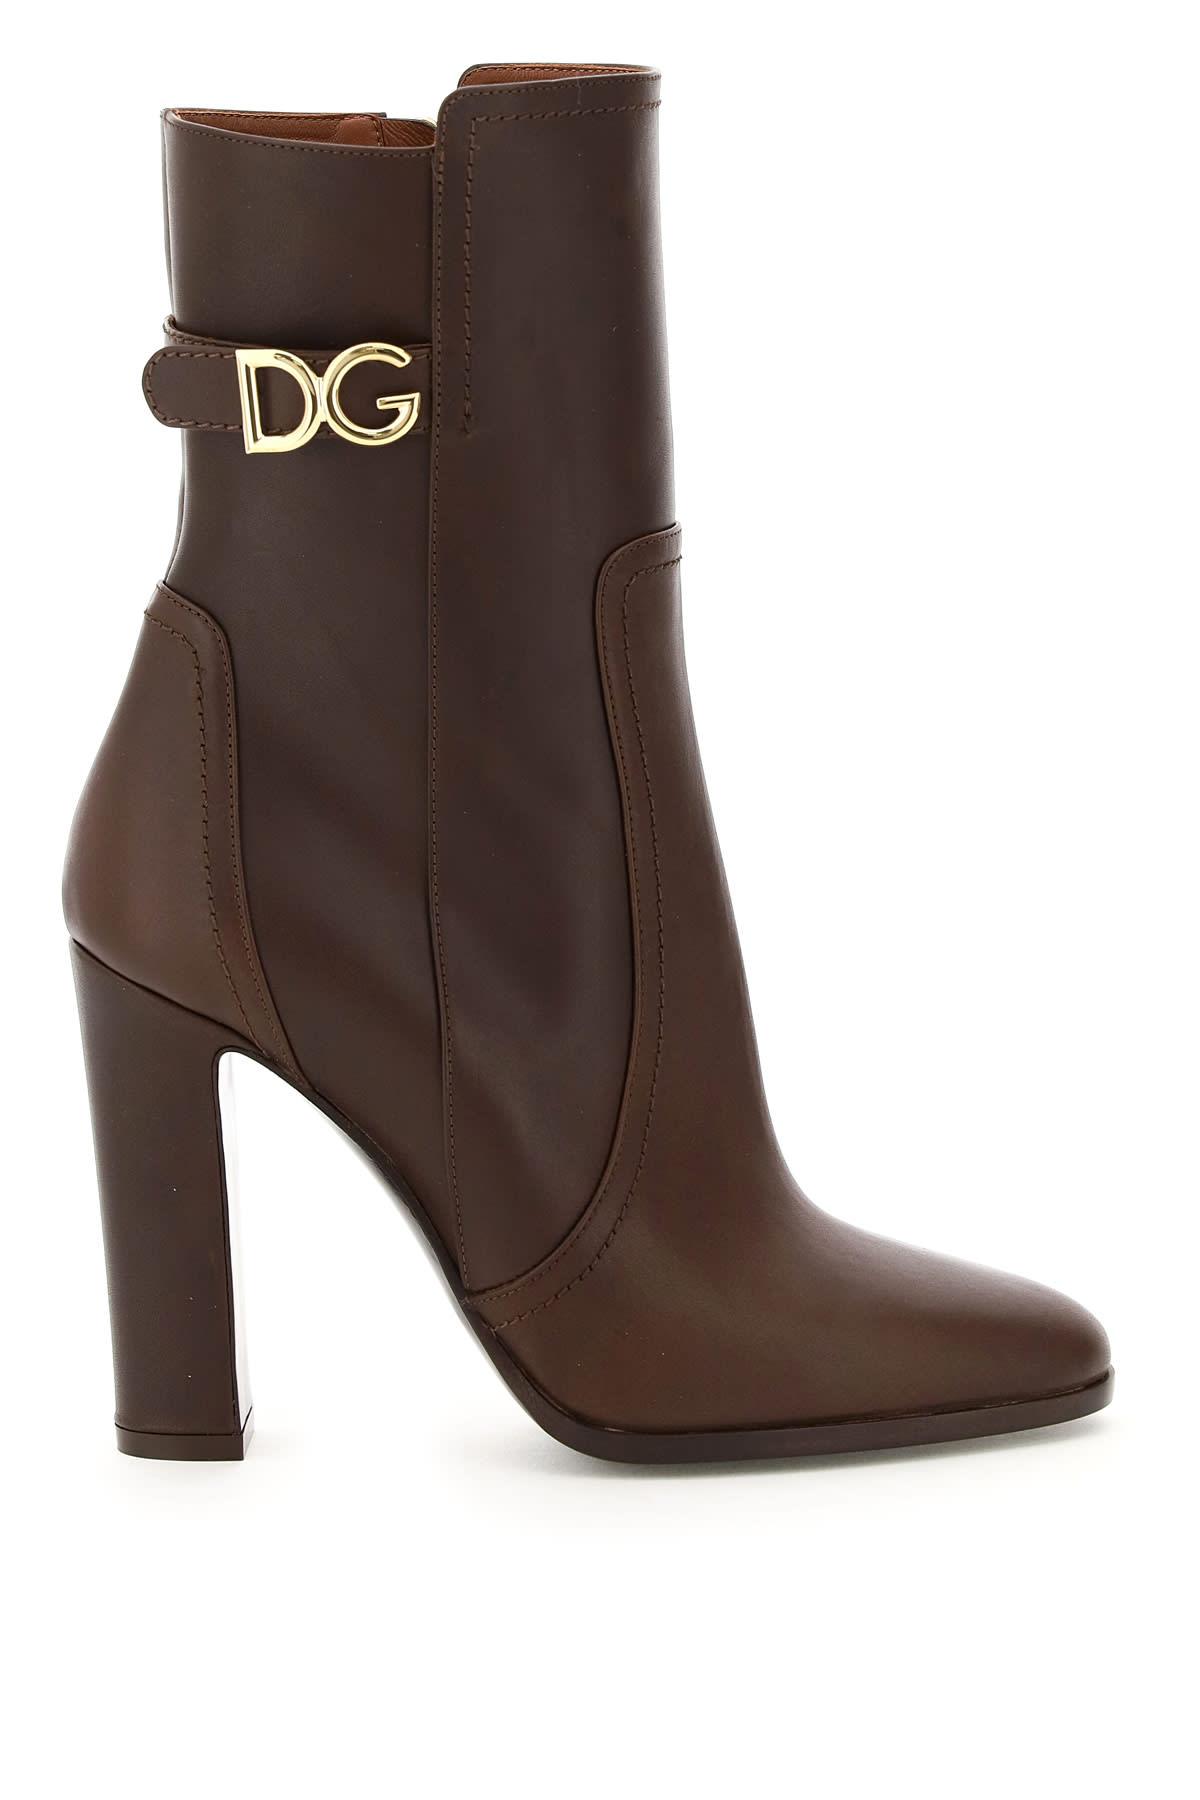 Dolce & Gabbana Dg Caroline Ankle Boots